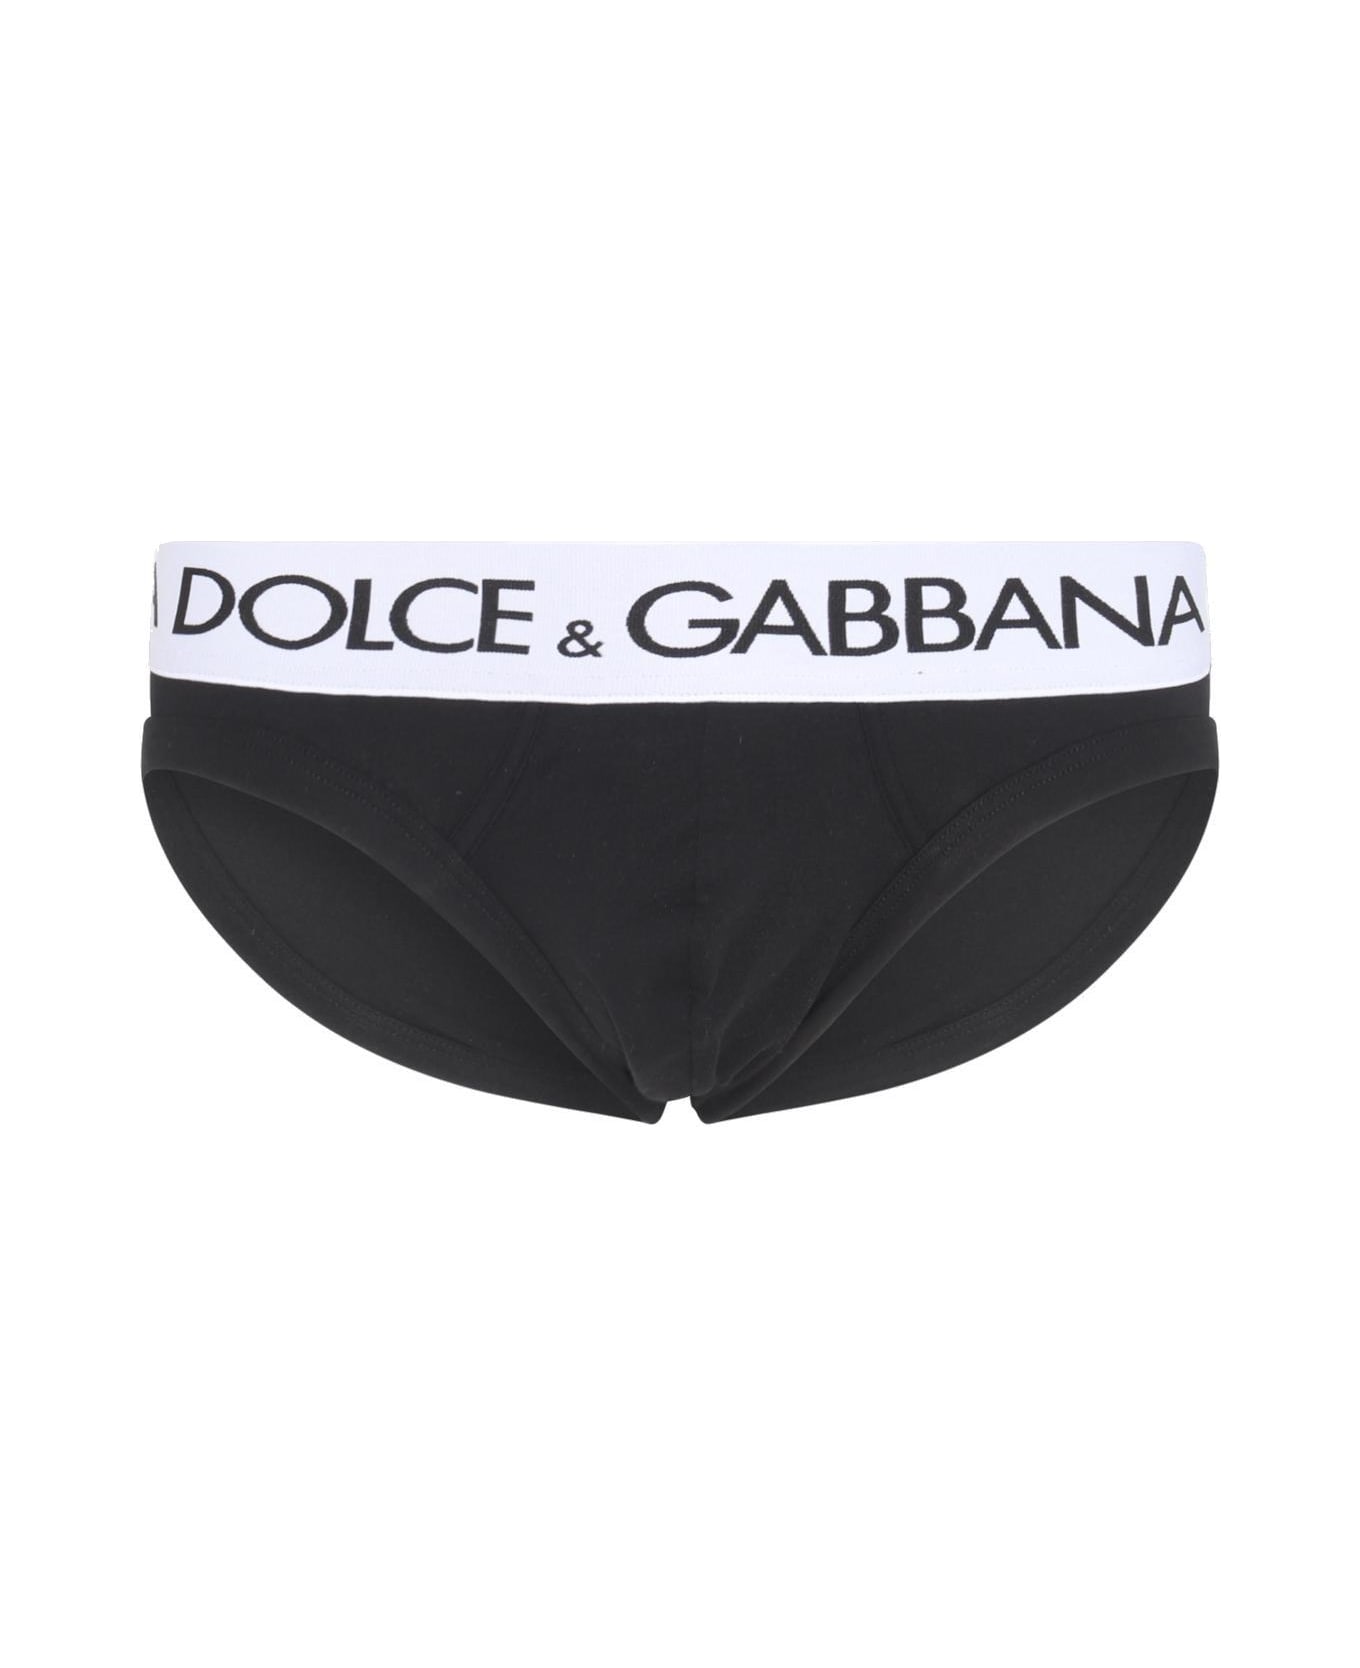 Dolce & Gabbana Elasticated Logo Waist Briefs - White/Black